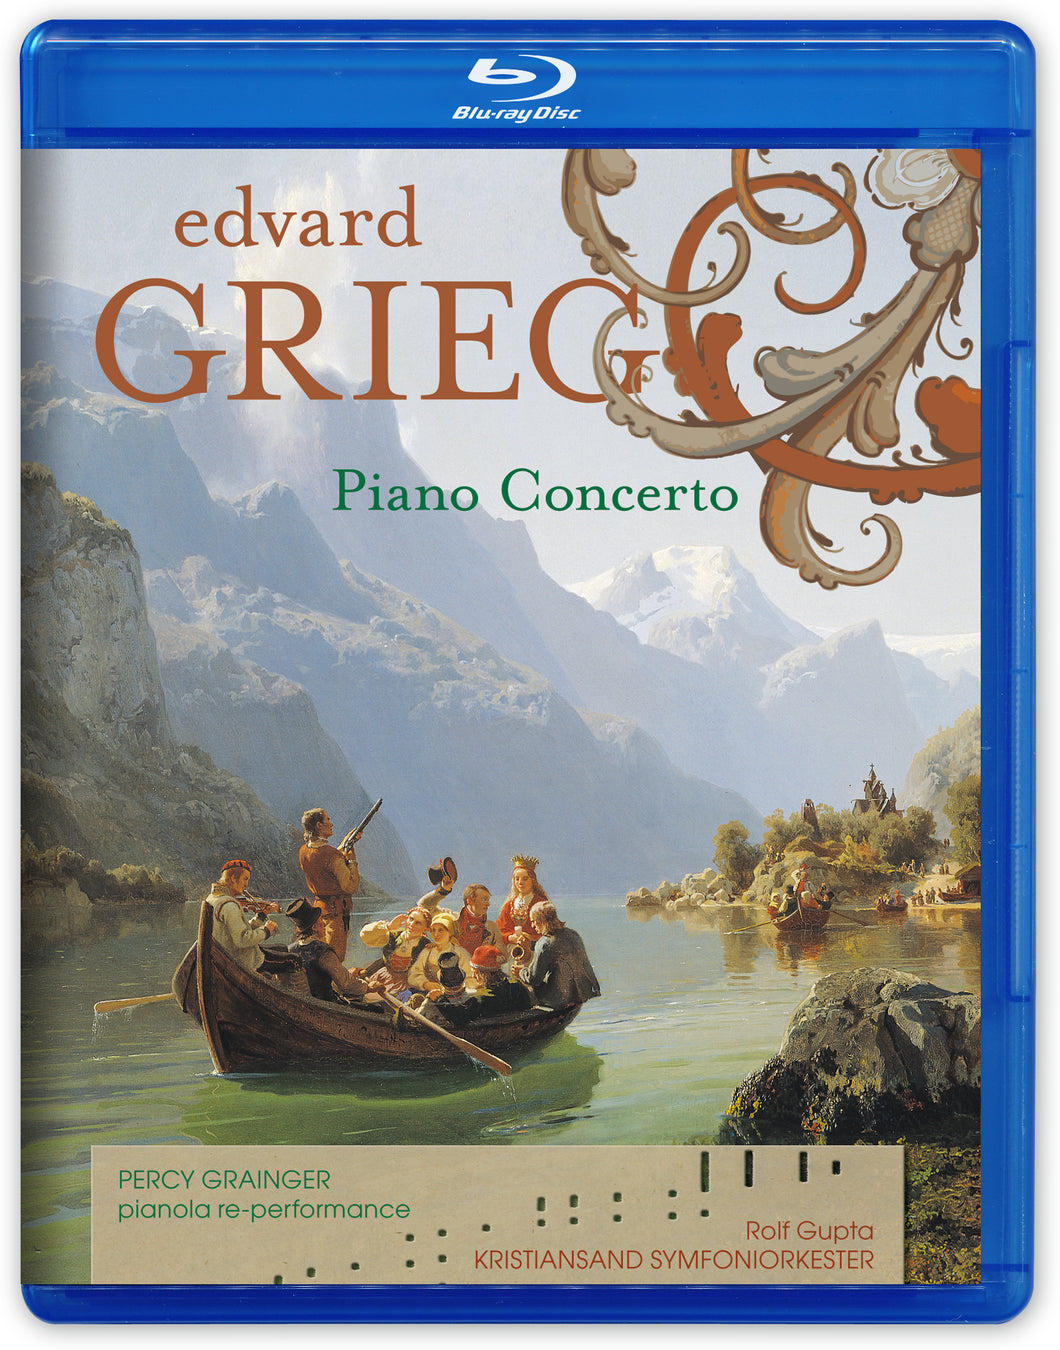 GRIEG Piano Concerto - Percy Grainger, Kristiansand Symfoniorkester, Rolf Gupta, Edvard Grieg, Øyvind Bjorå, Rex Lawson